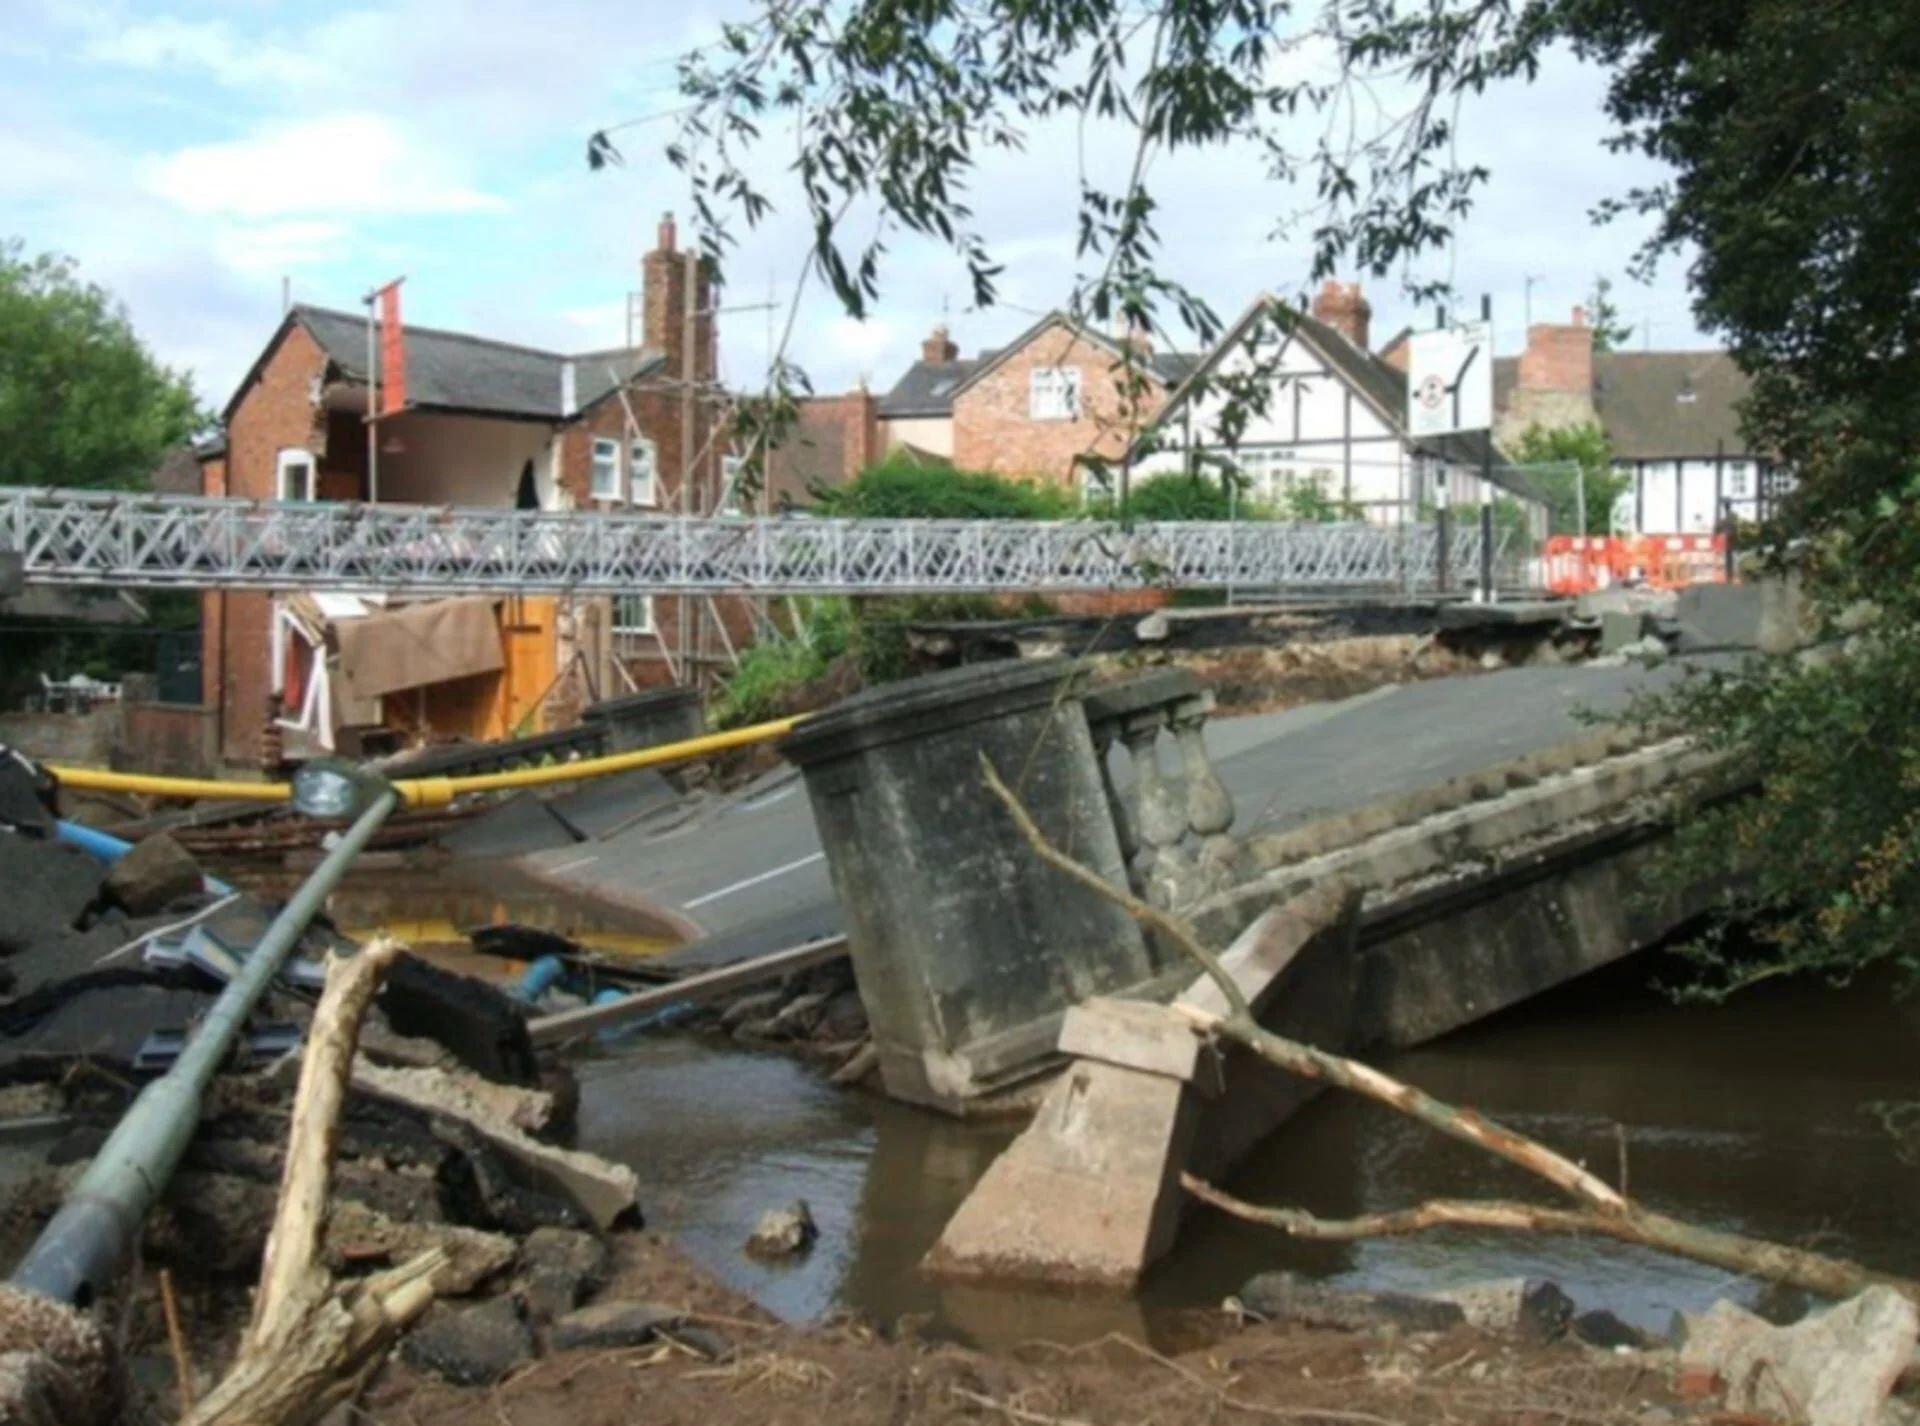 The 2007 U.K. floods led to Britain's biggest peacetime rescue efforts